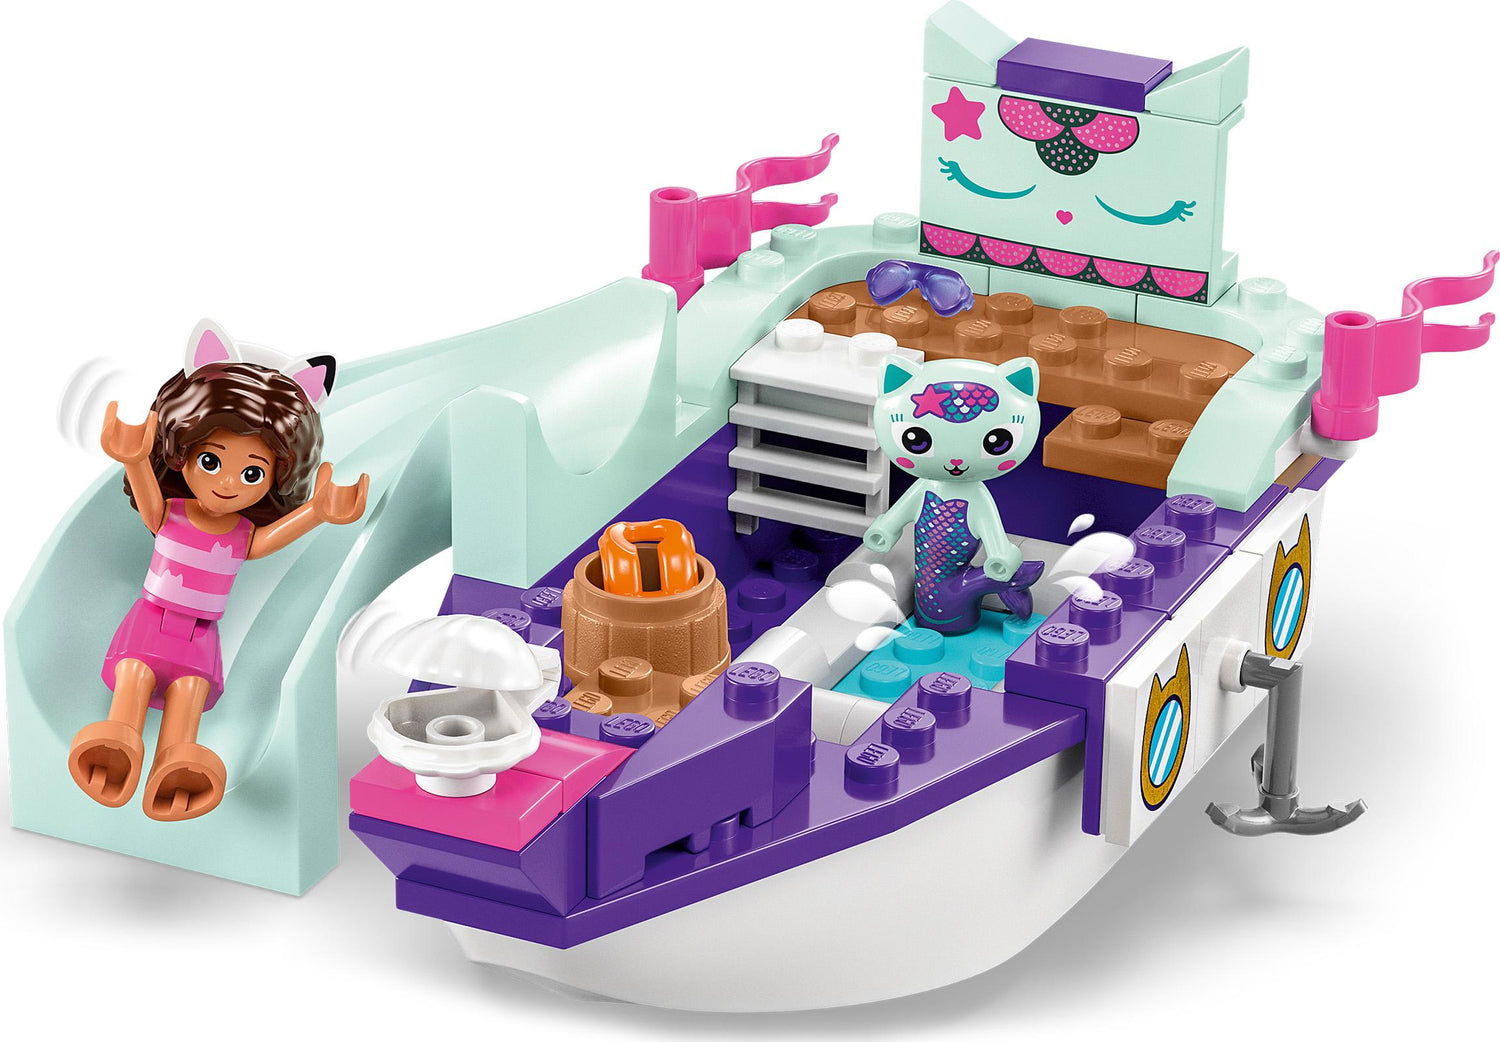  LEGO: LEGO Gabby's Dollhouse